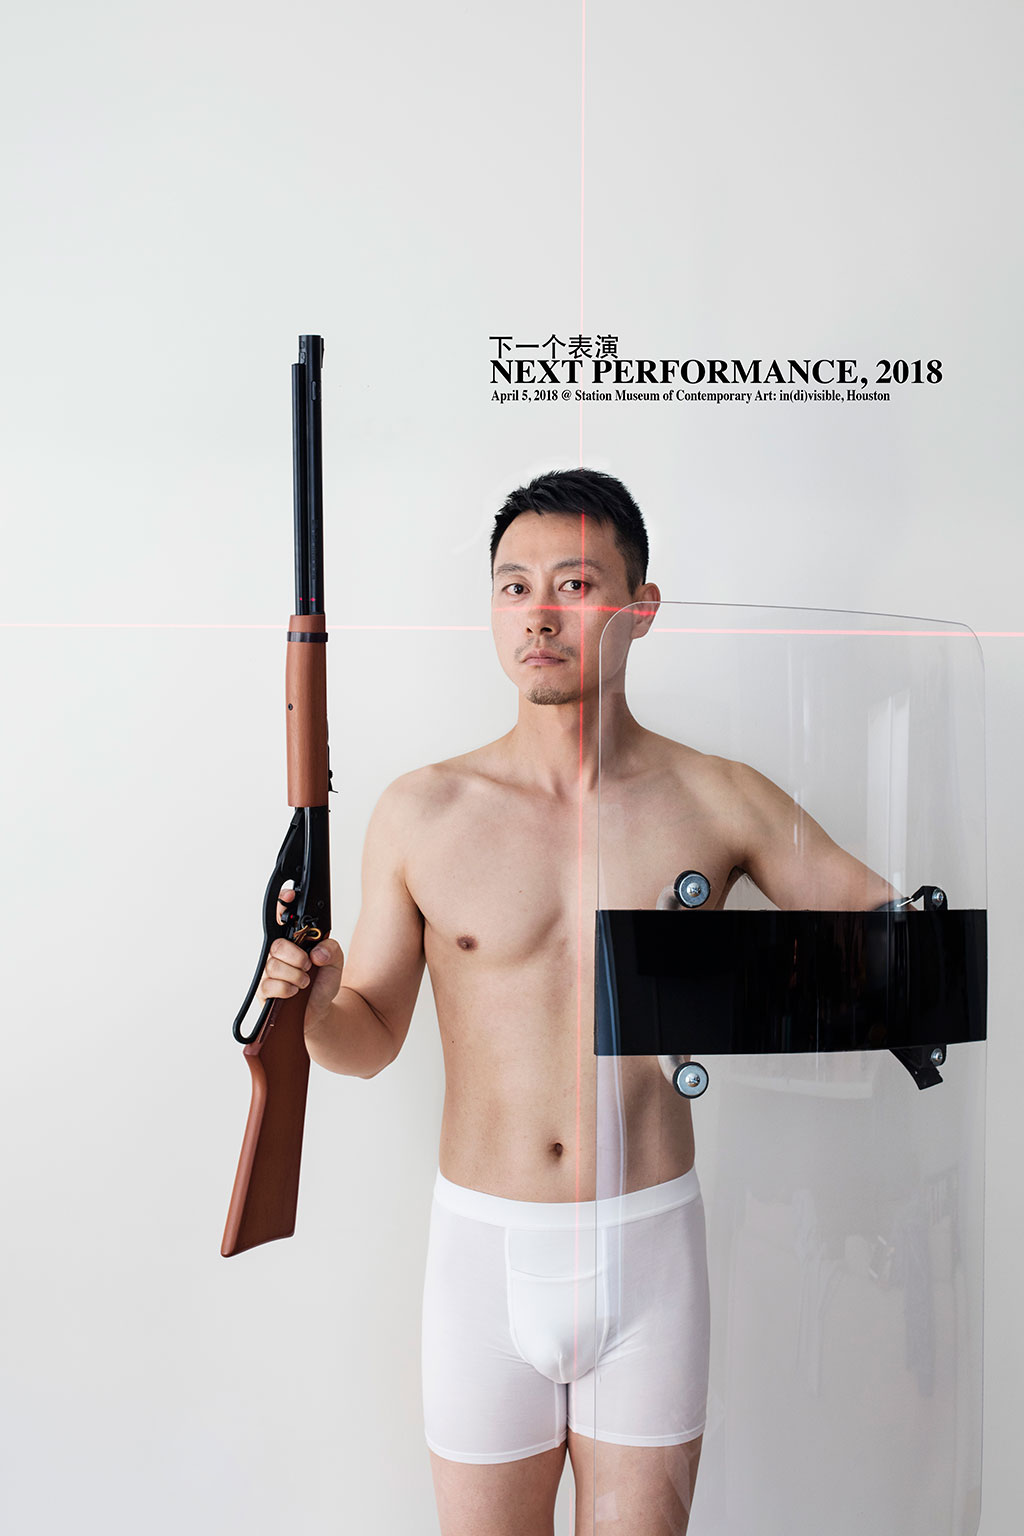 Next Performance, 2018 by Miao Jiaxin